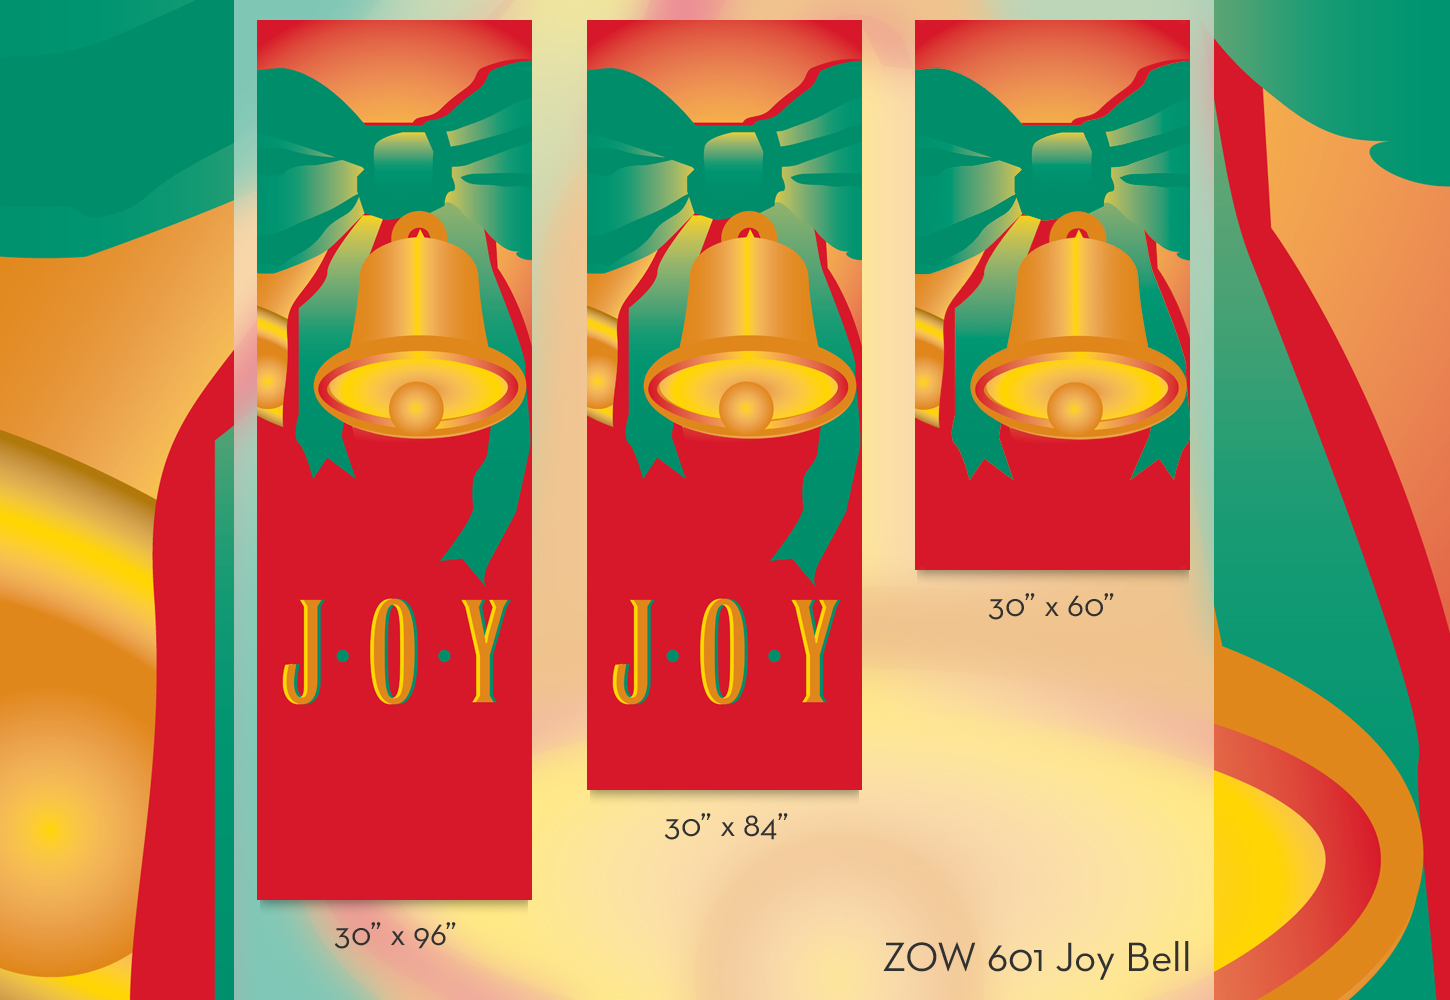 ZOW 601 Joy Bell